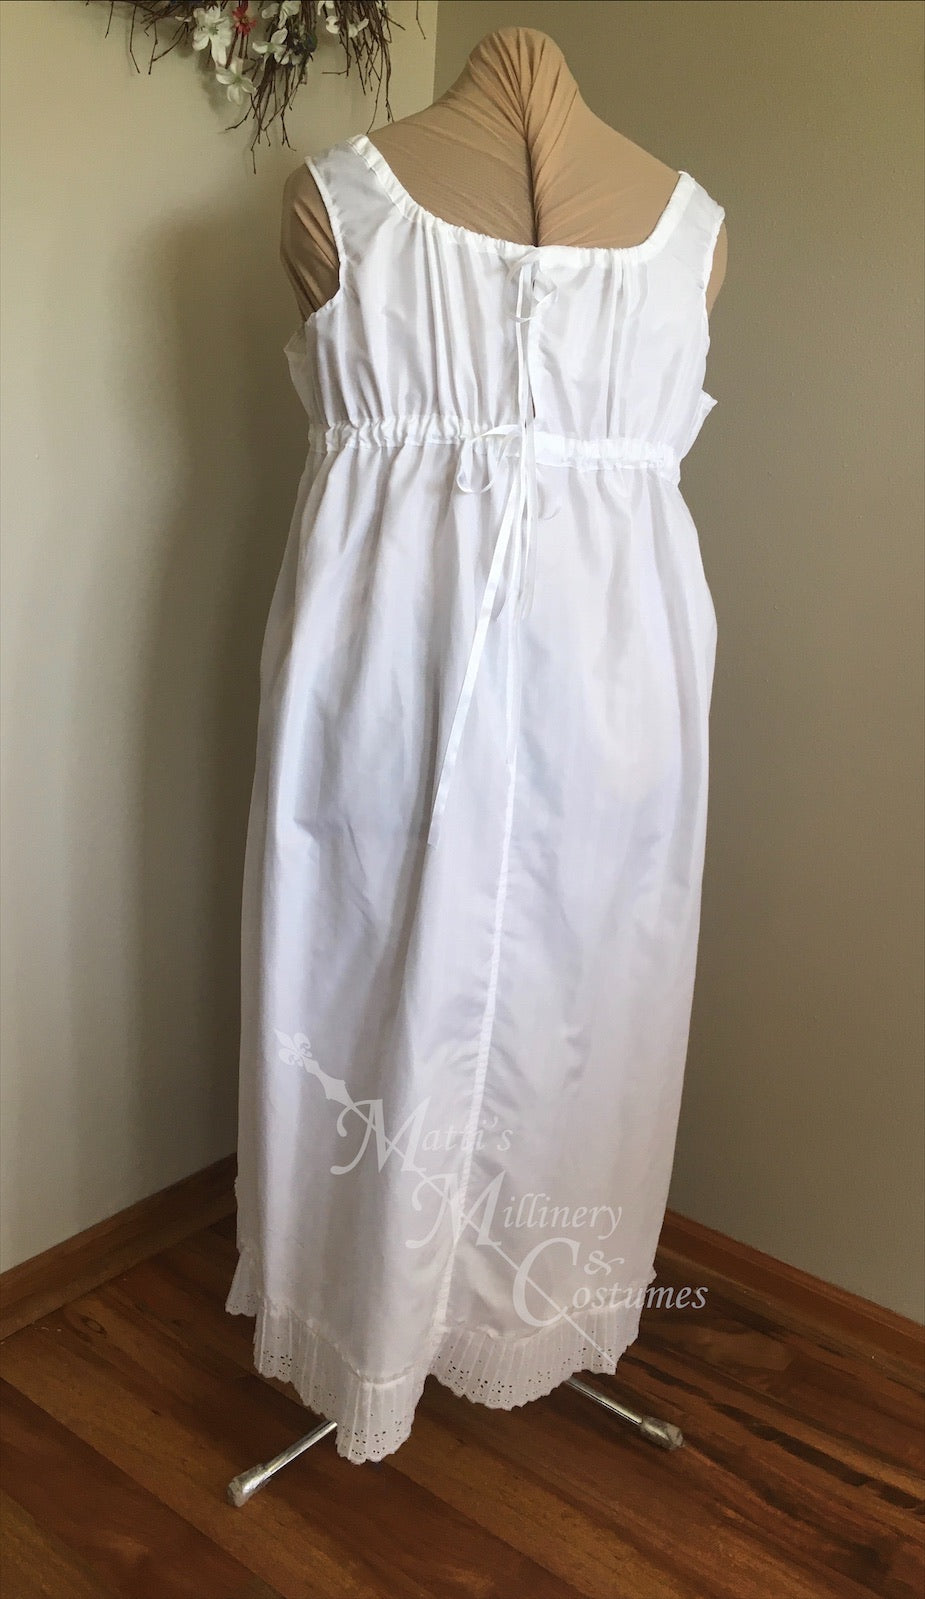 Bodiced Under Dress Cotton Regency Jane Austen Day Dress Gown